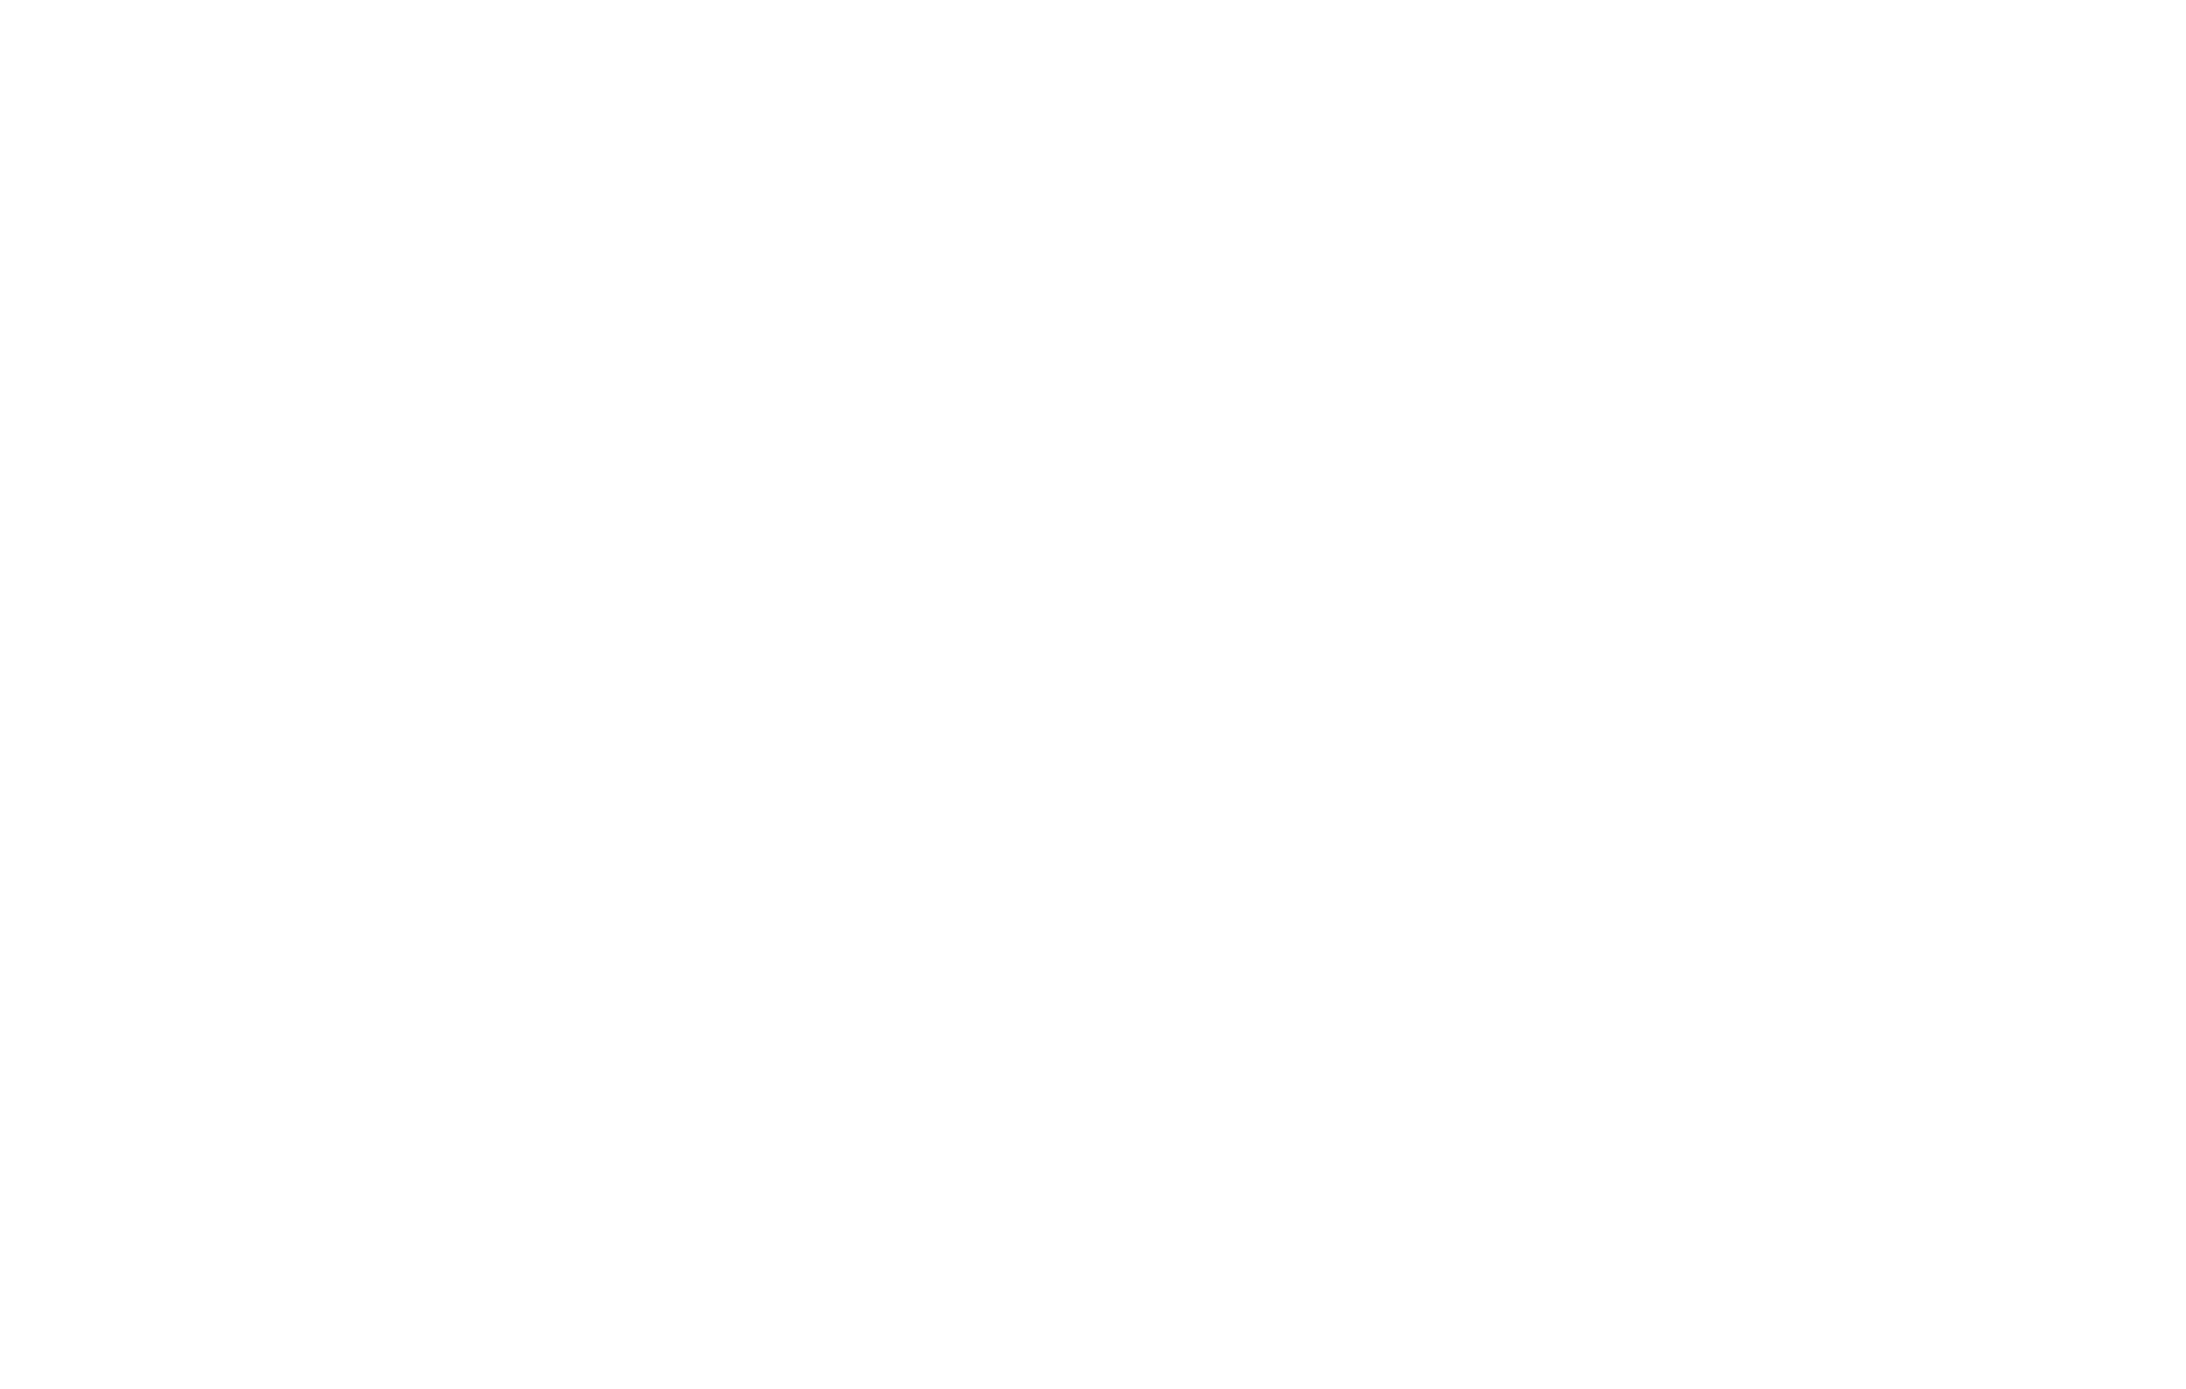 Knightsbridge College